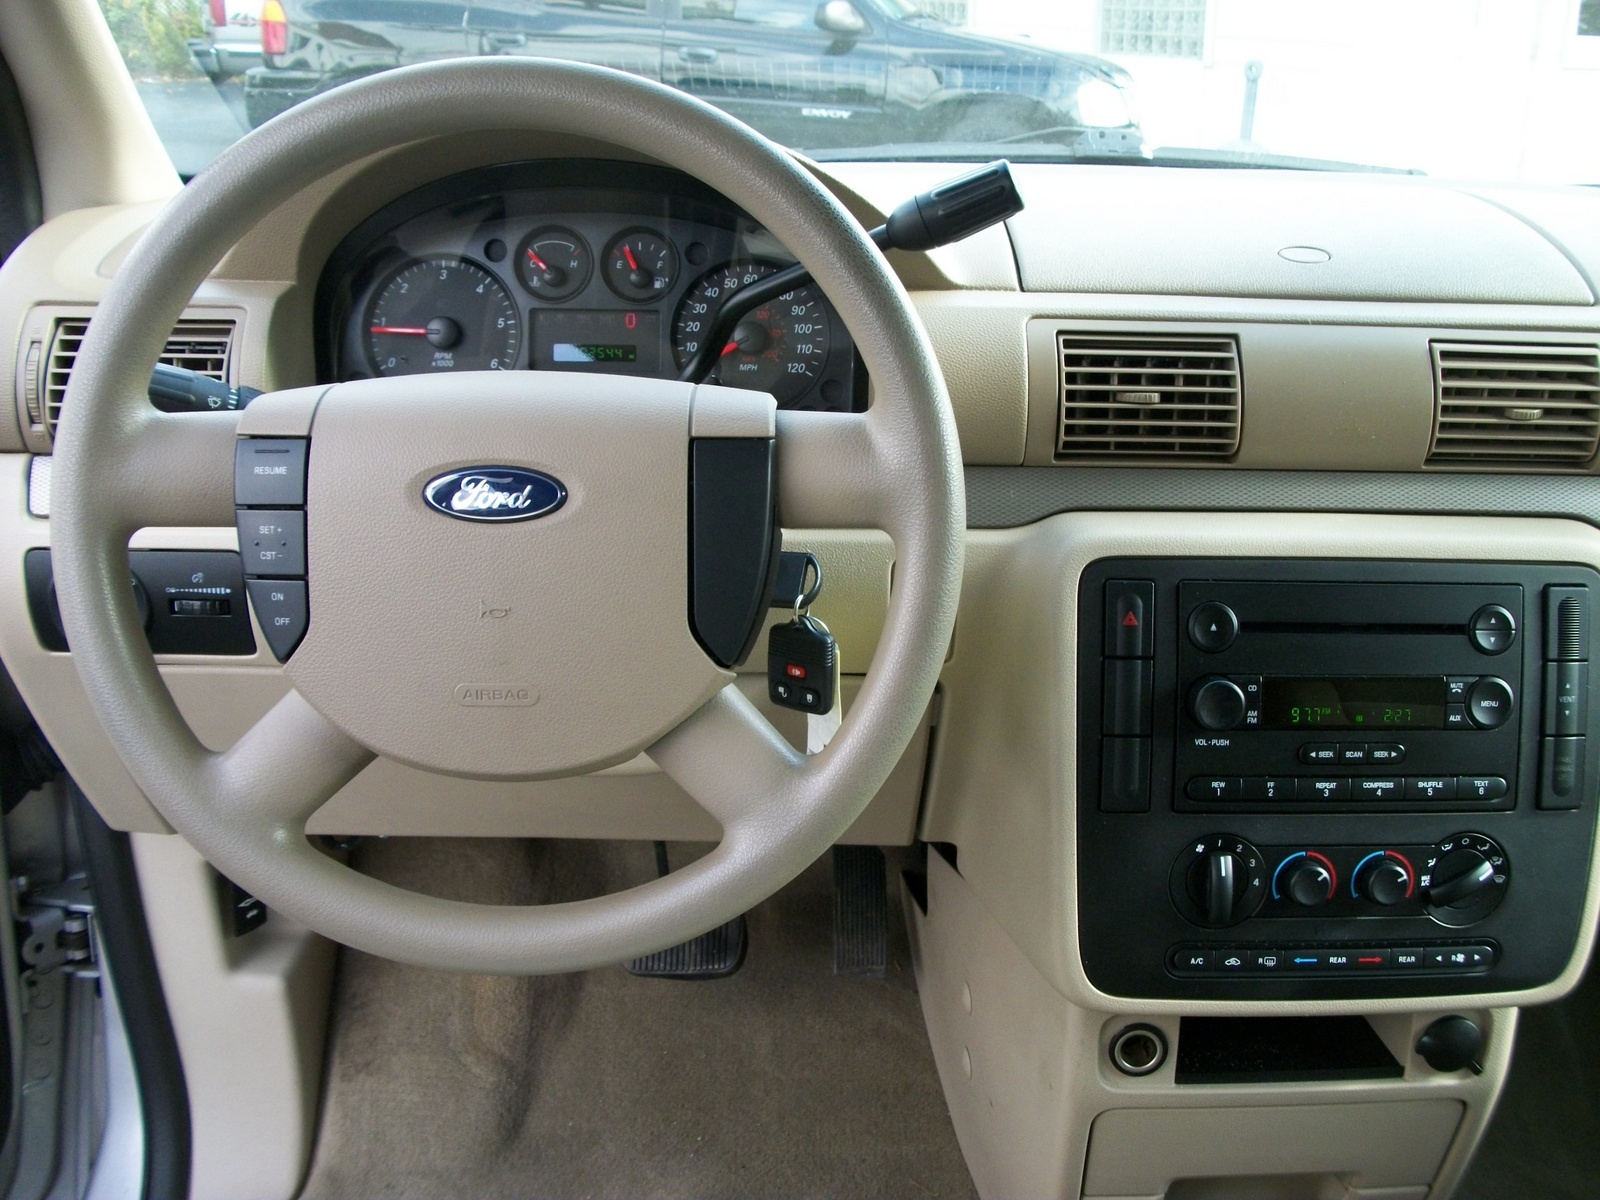 2005 Ford freestar interior